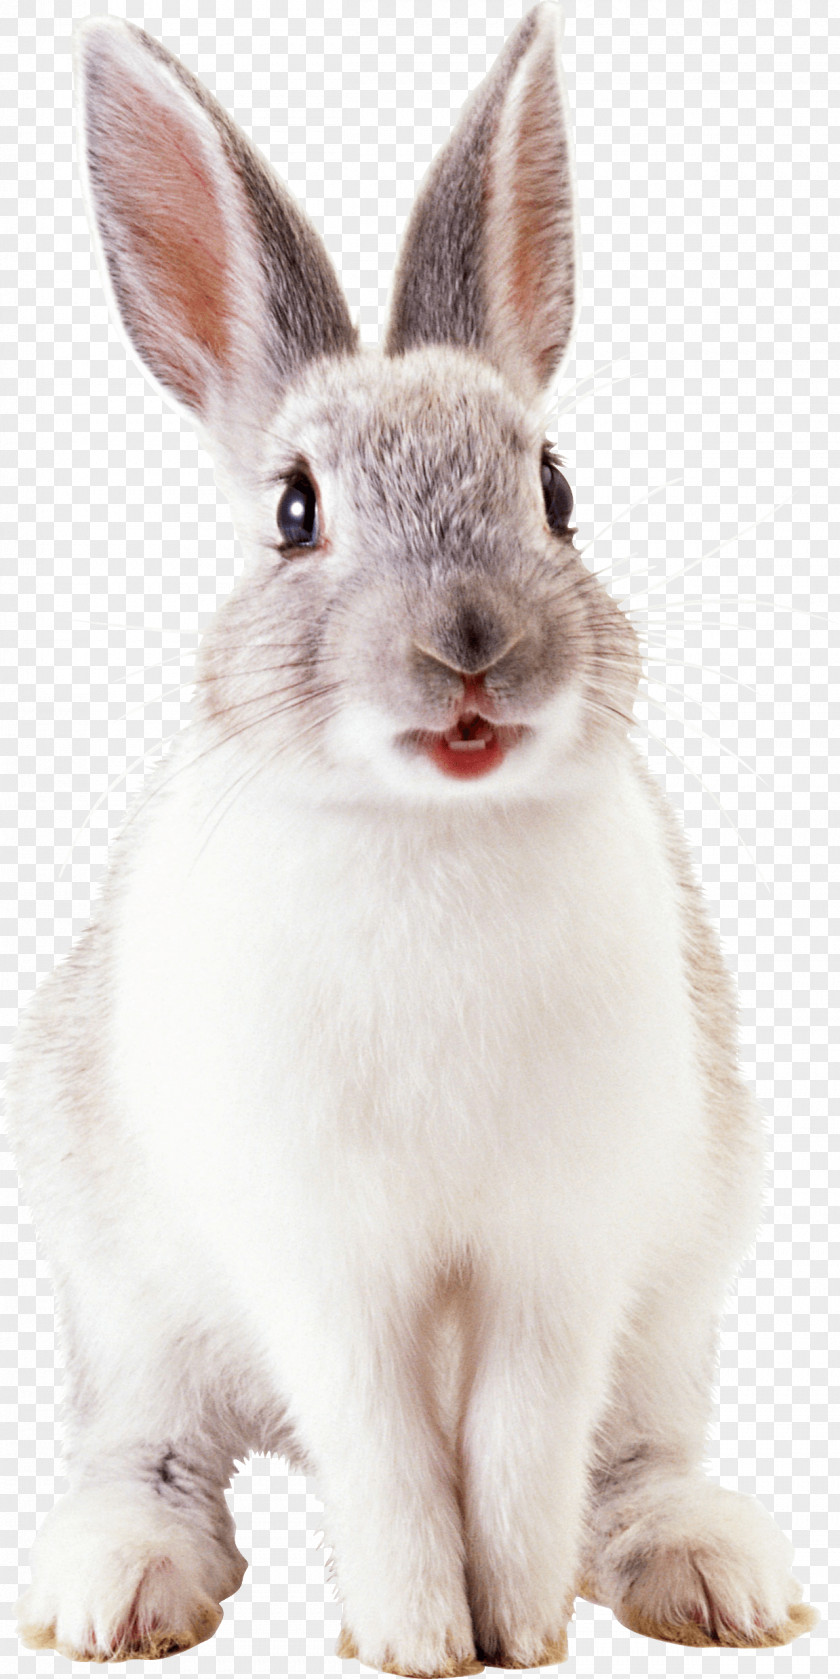 White Rabbit Image Clip Art PNG